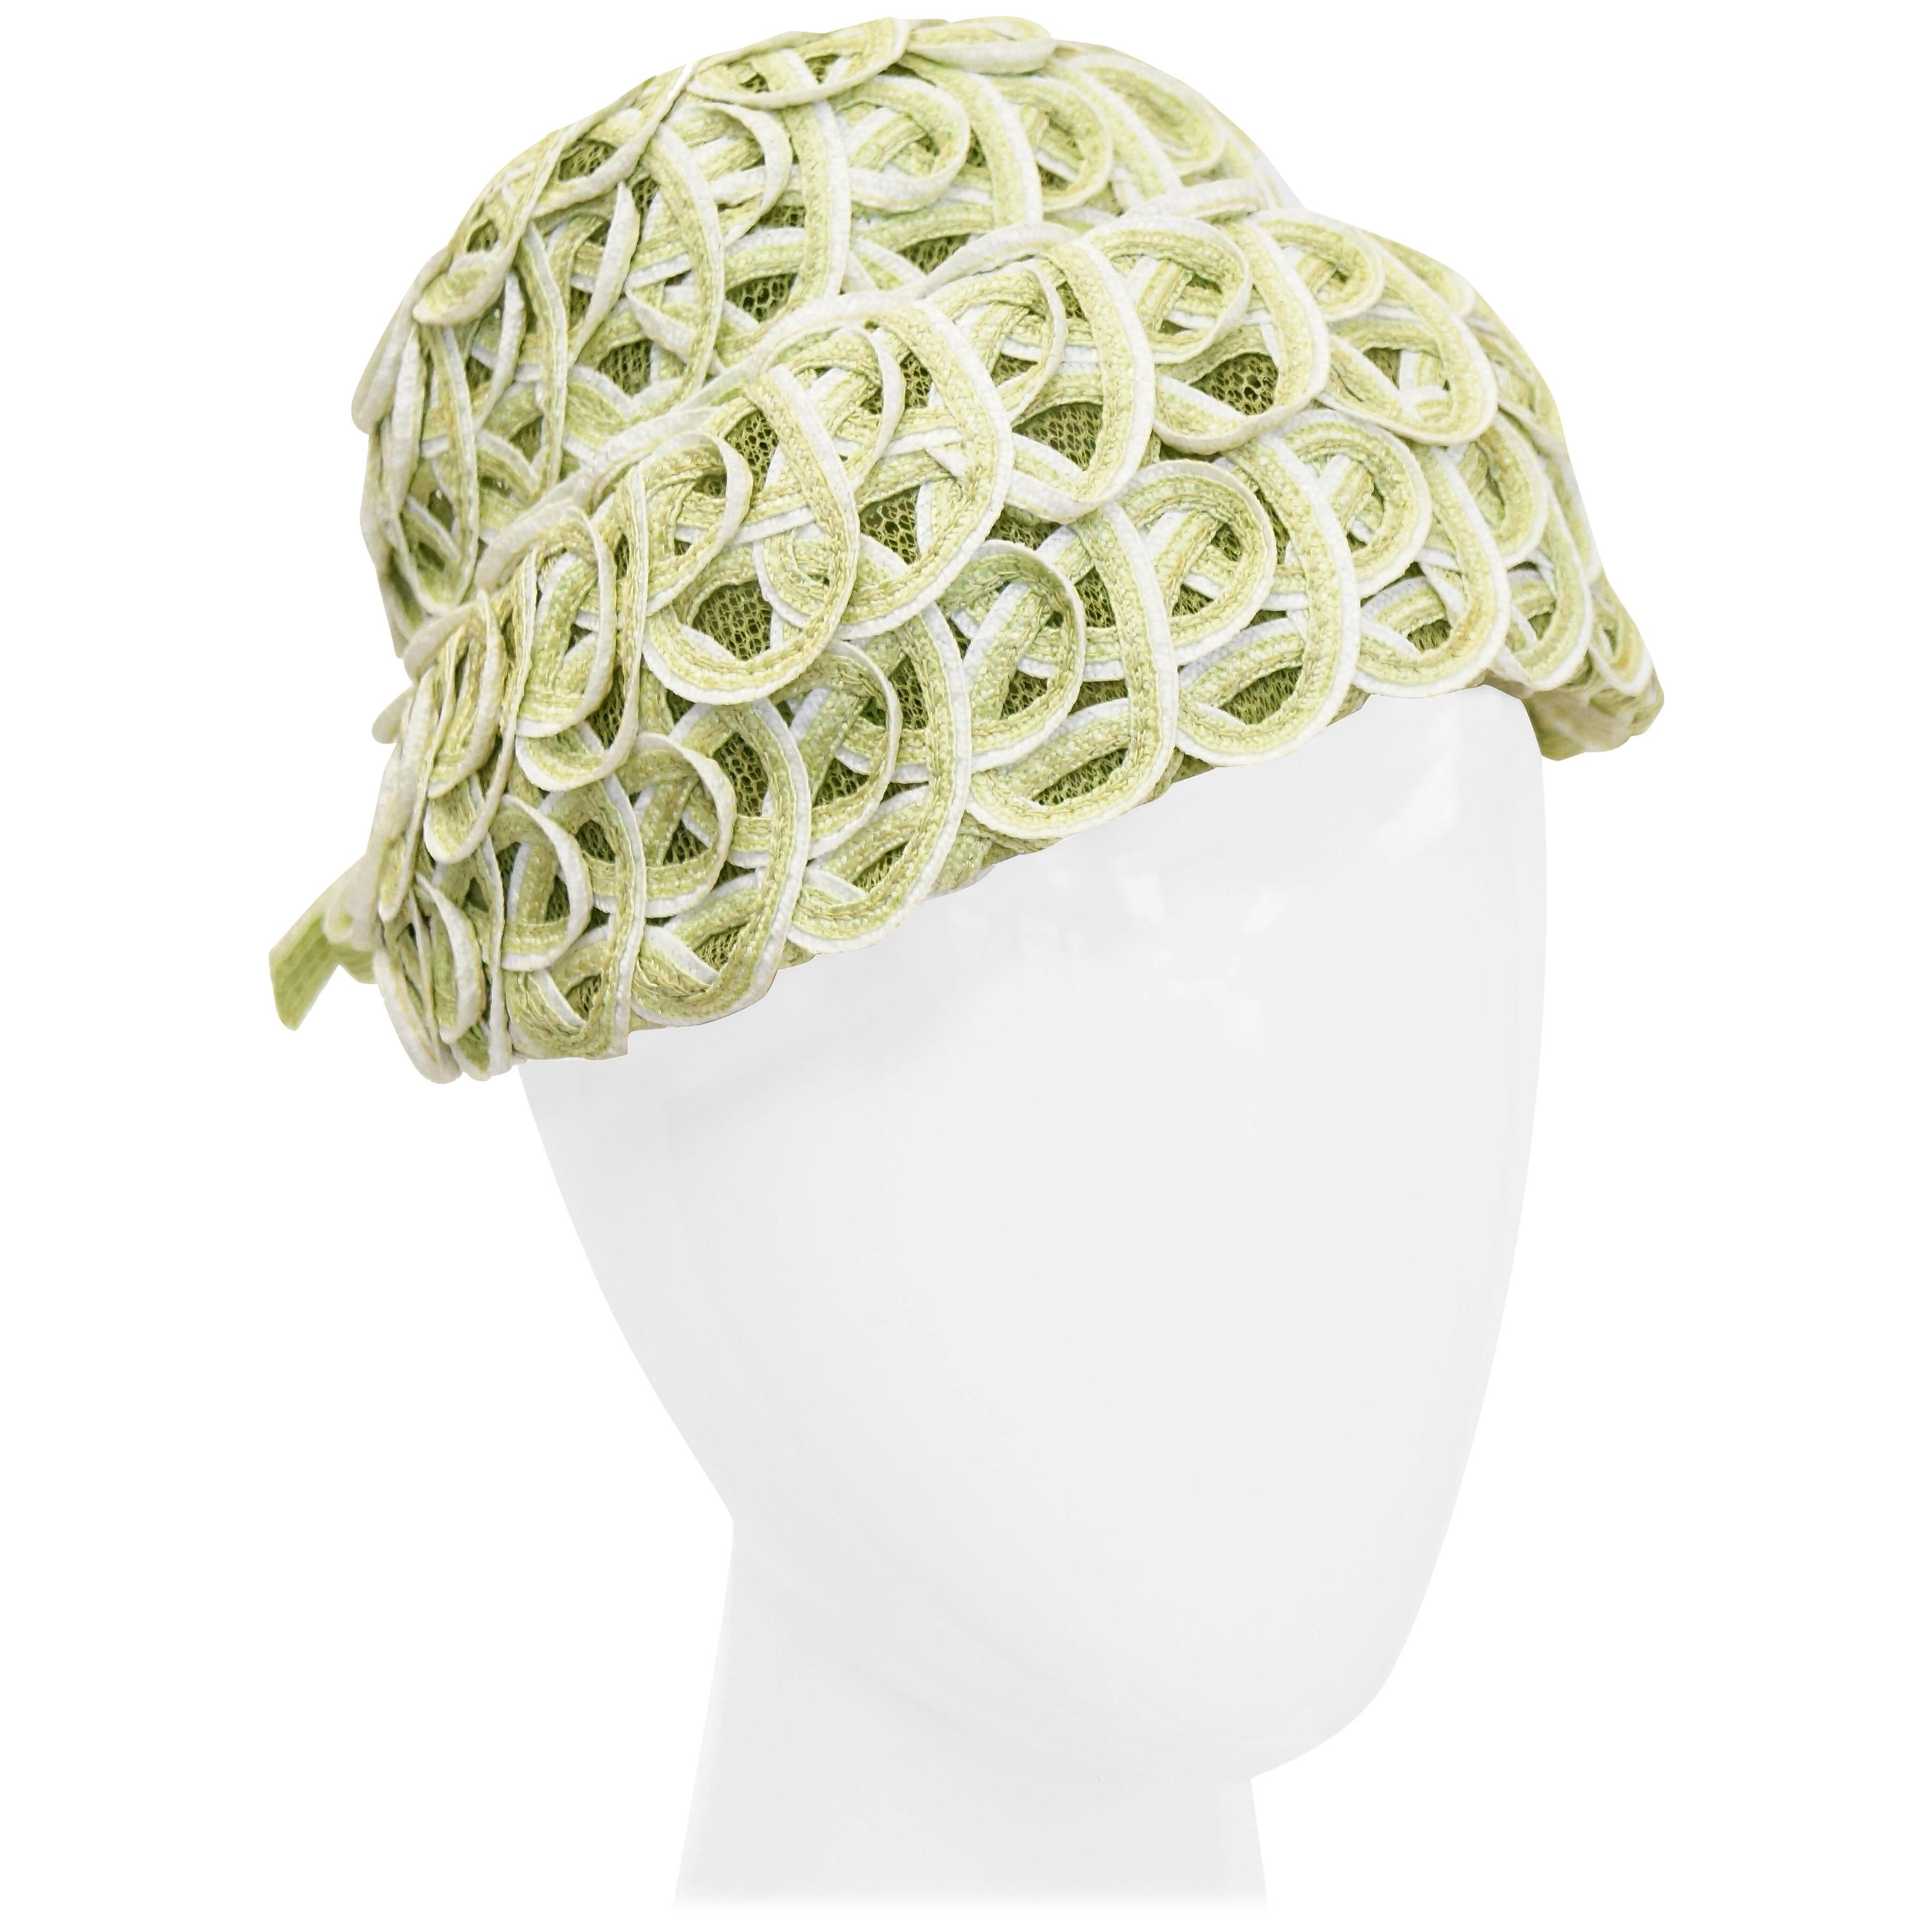 Balenciaga Reproduction Peach Basket Hat in a Subtle Green, 1950s 